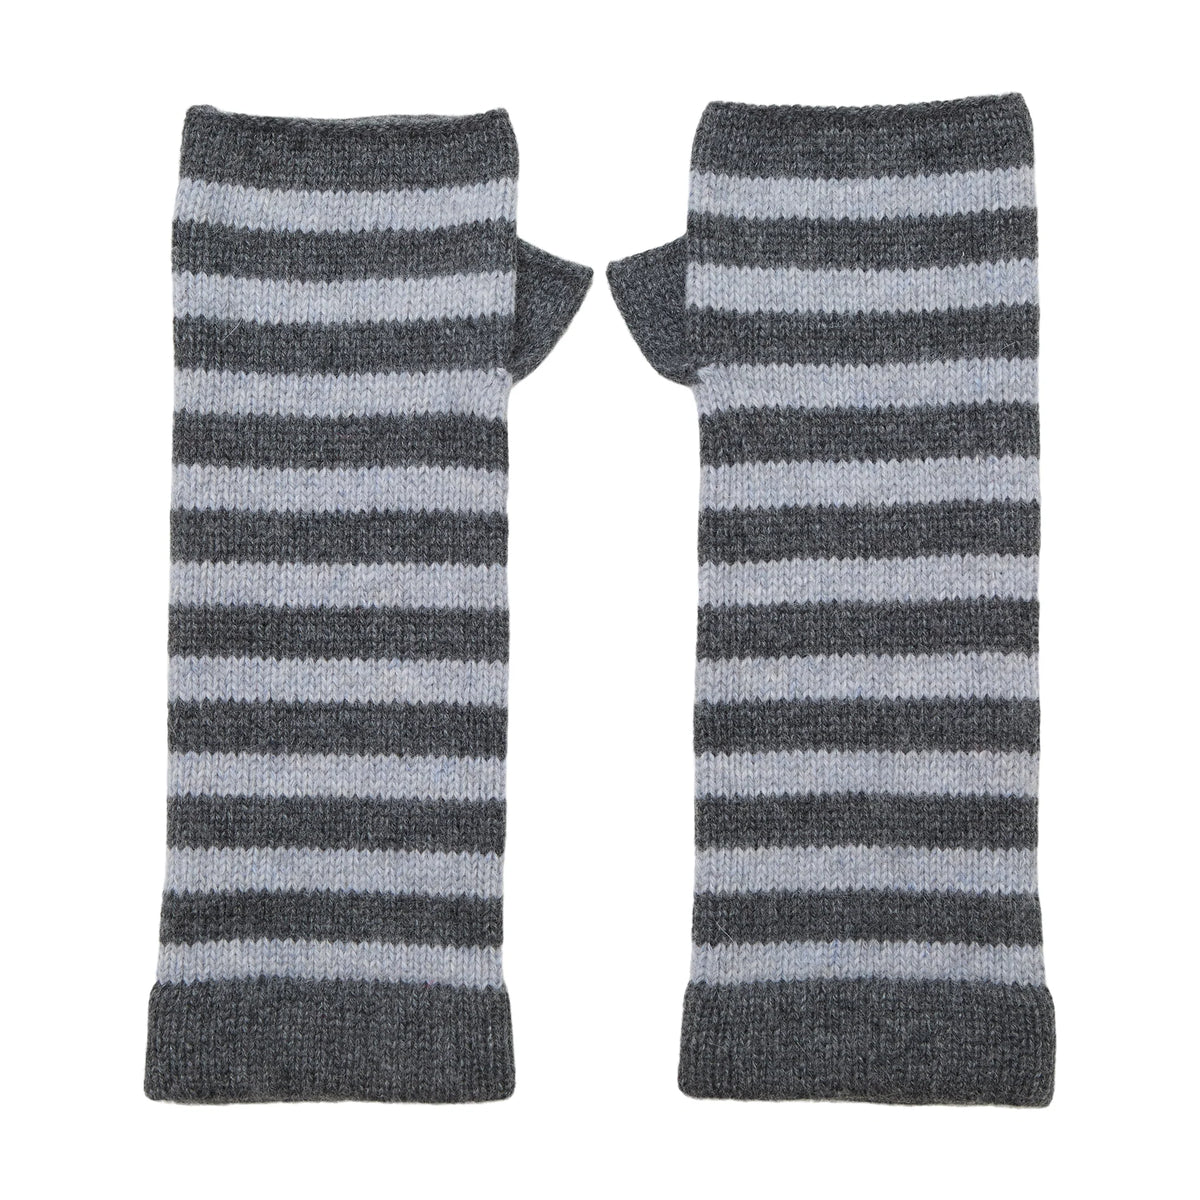 Light and dark grey striped cashmere wrist warmers